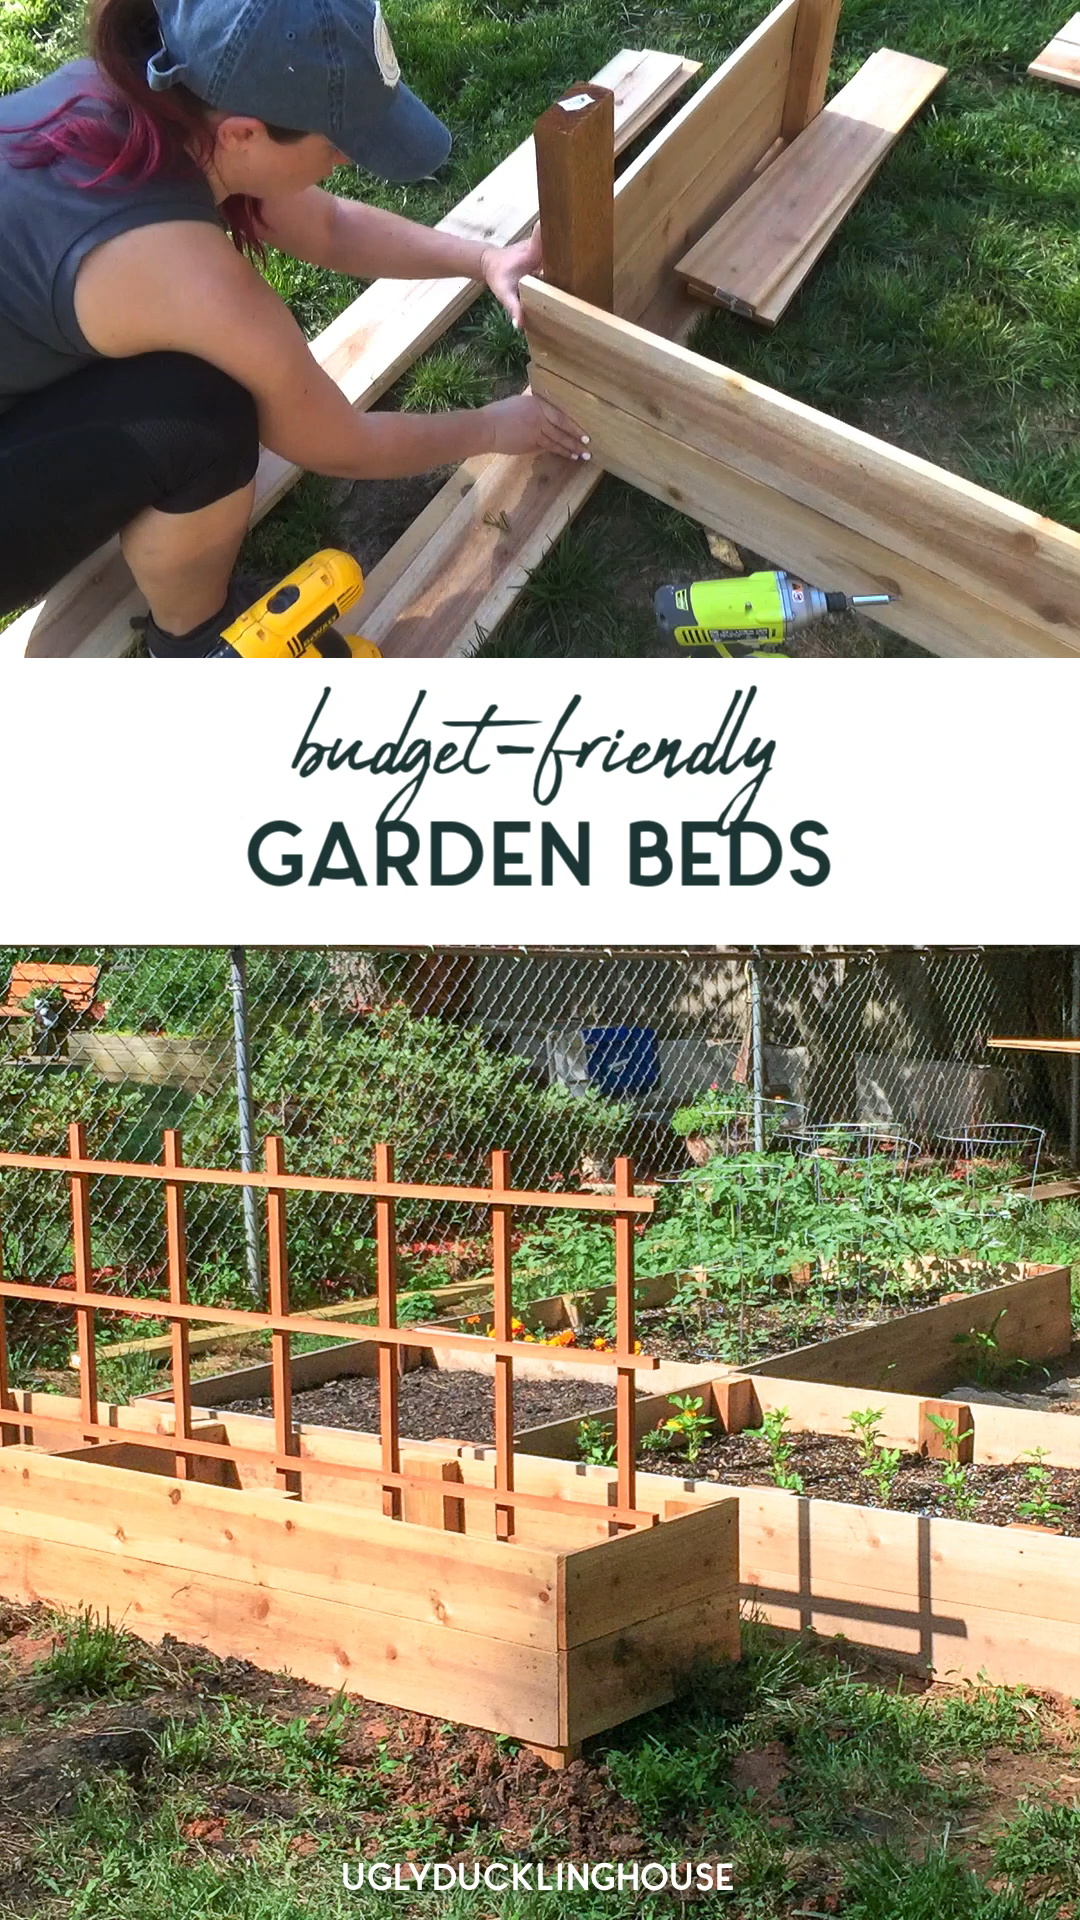 DIY Budget-Friendly Garden Beds - DIY Budget-Friendly Garden Beds -   17 diy House out of boxes ideas